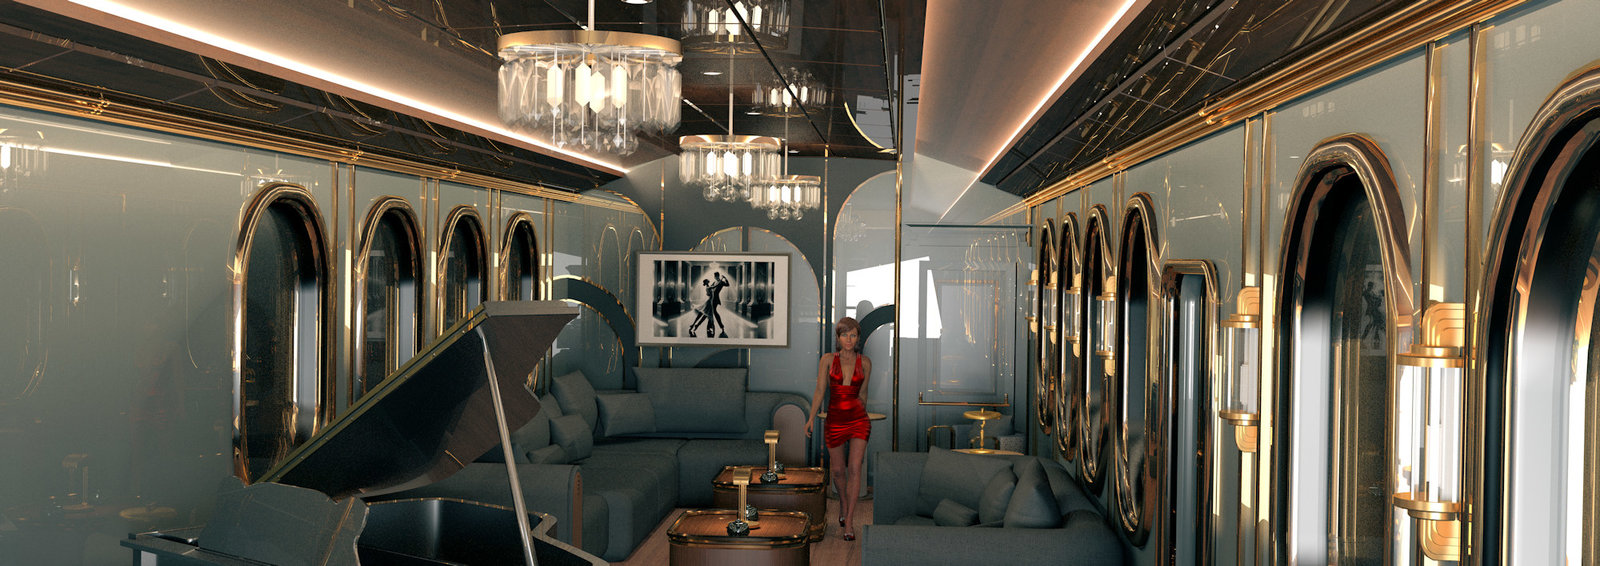 Luxury Train Lounge HW.jpg